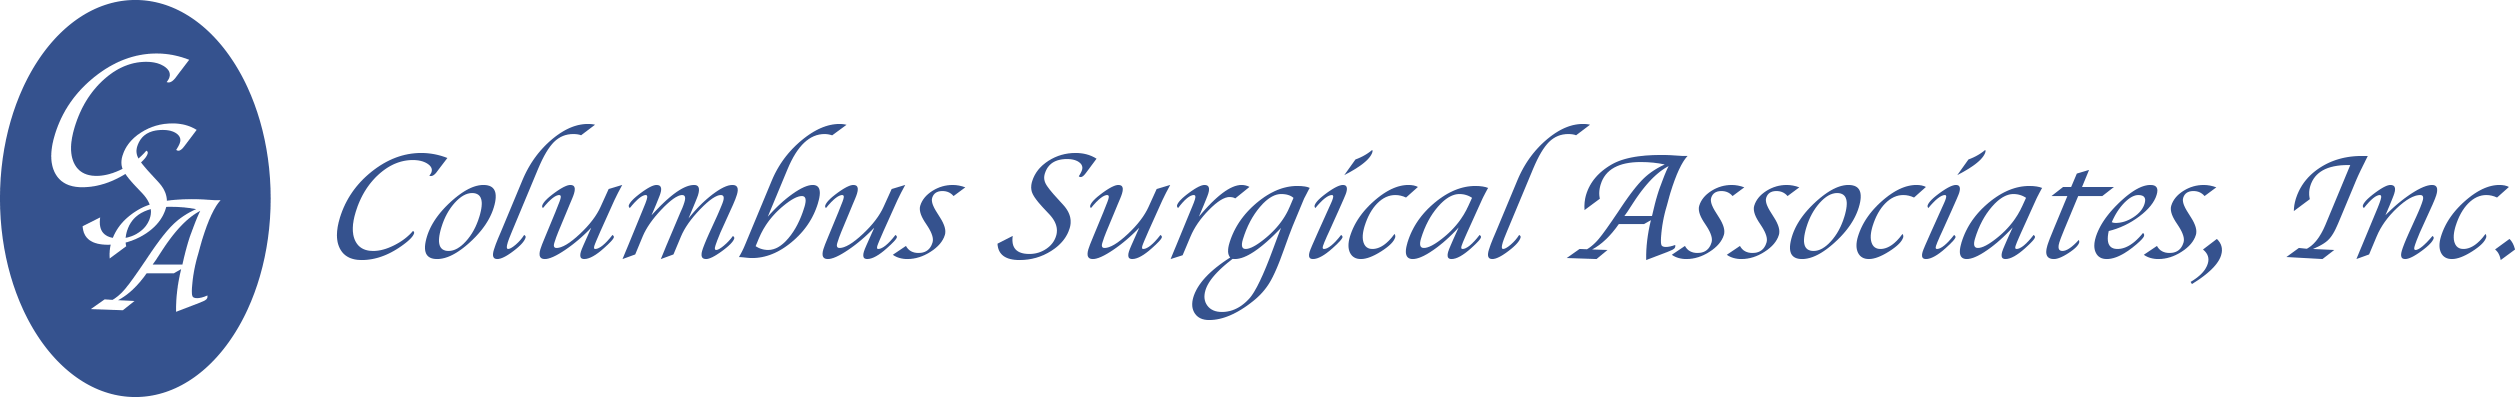 Columbus Surgical Associates